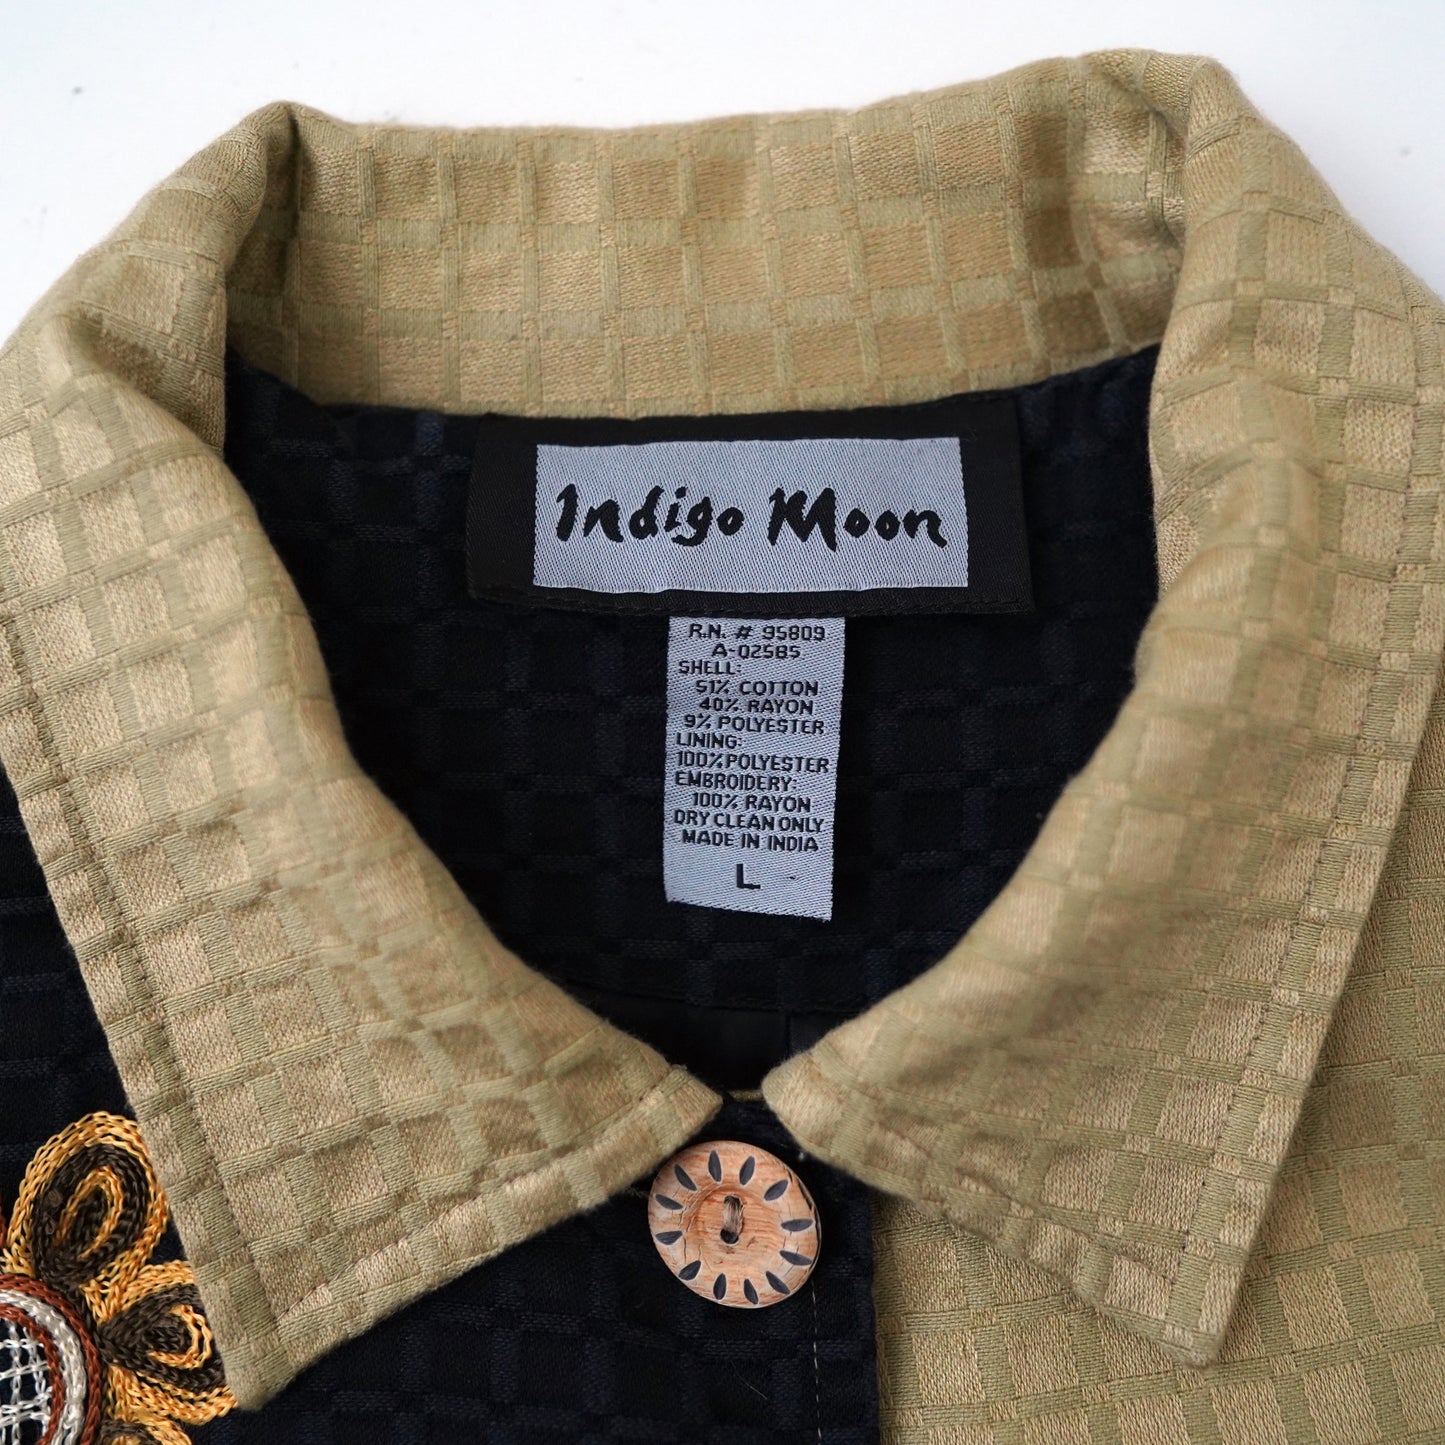 90s Flower pattern vintage jacket